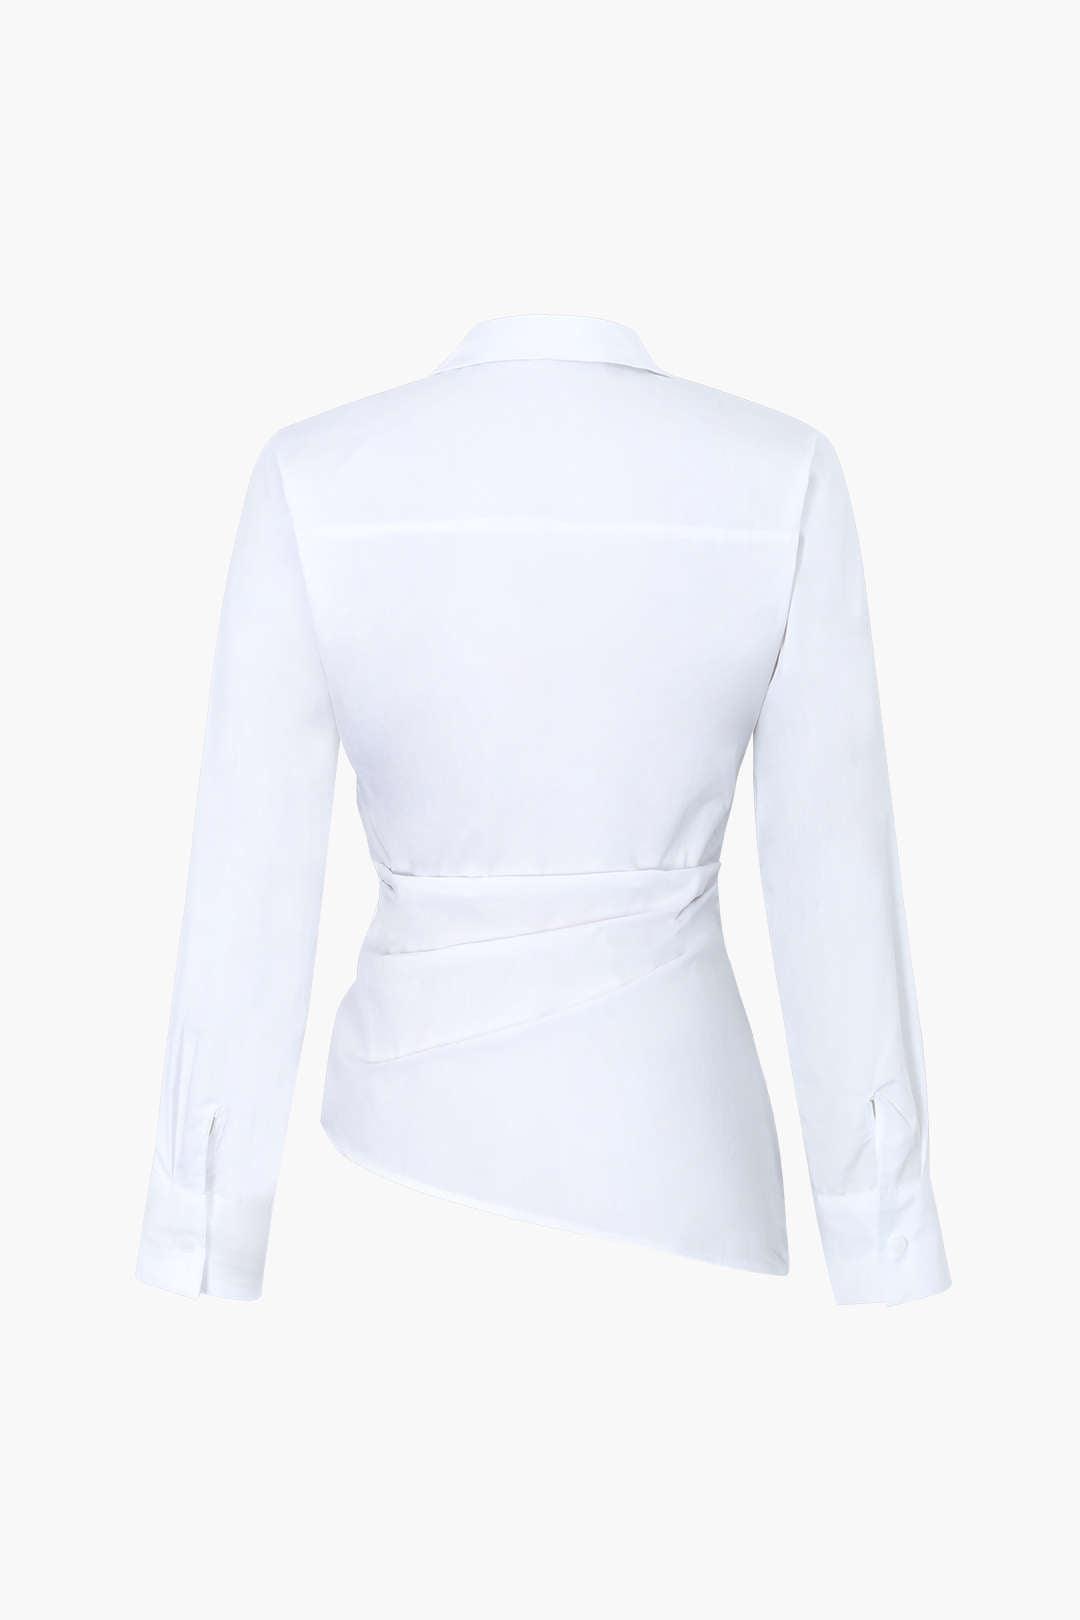 Longline Asymmetric Raw Hem Wholesale Plain White T Shirtsfob